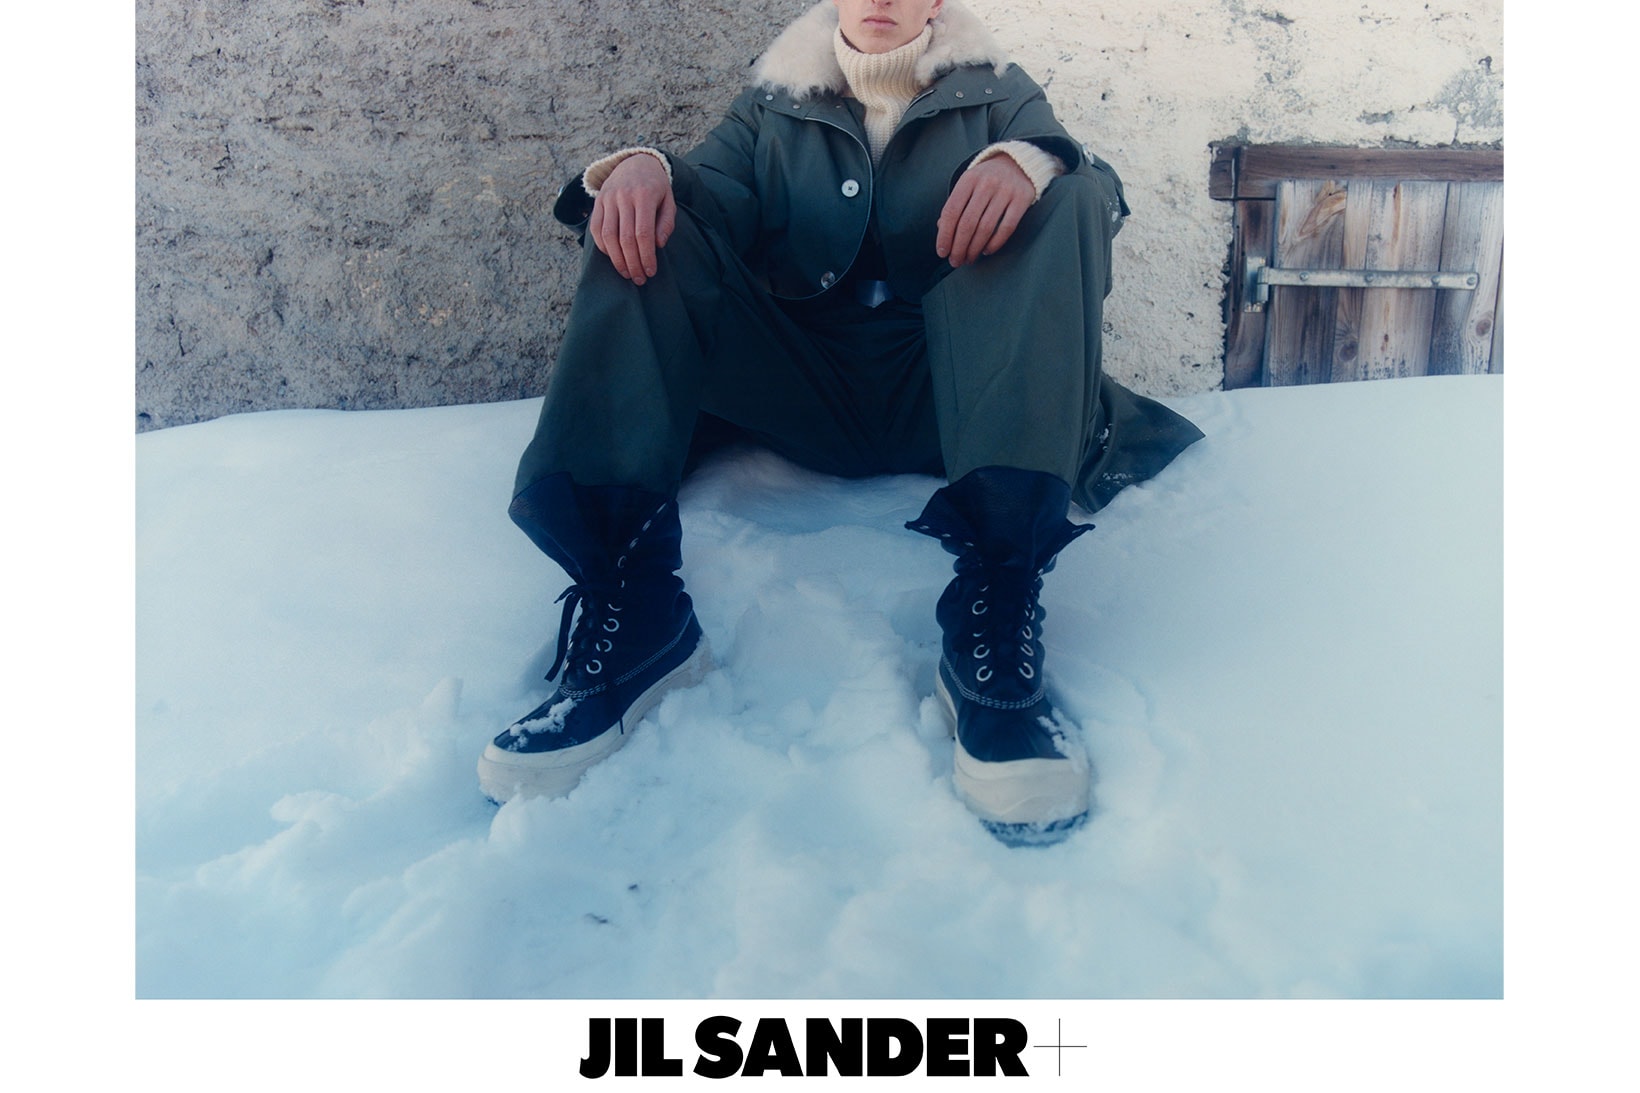 Jil Sander Fall Winter 2021 FW21 Campaign Boots Snow